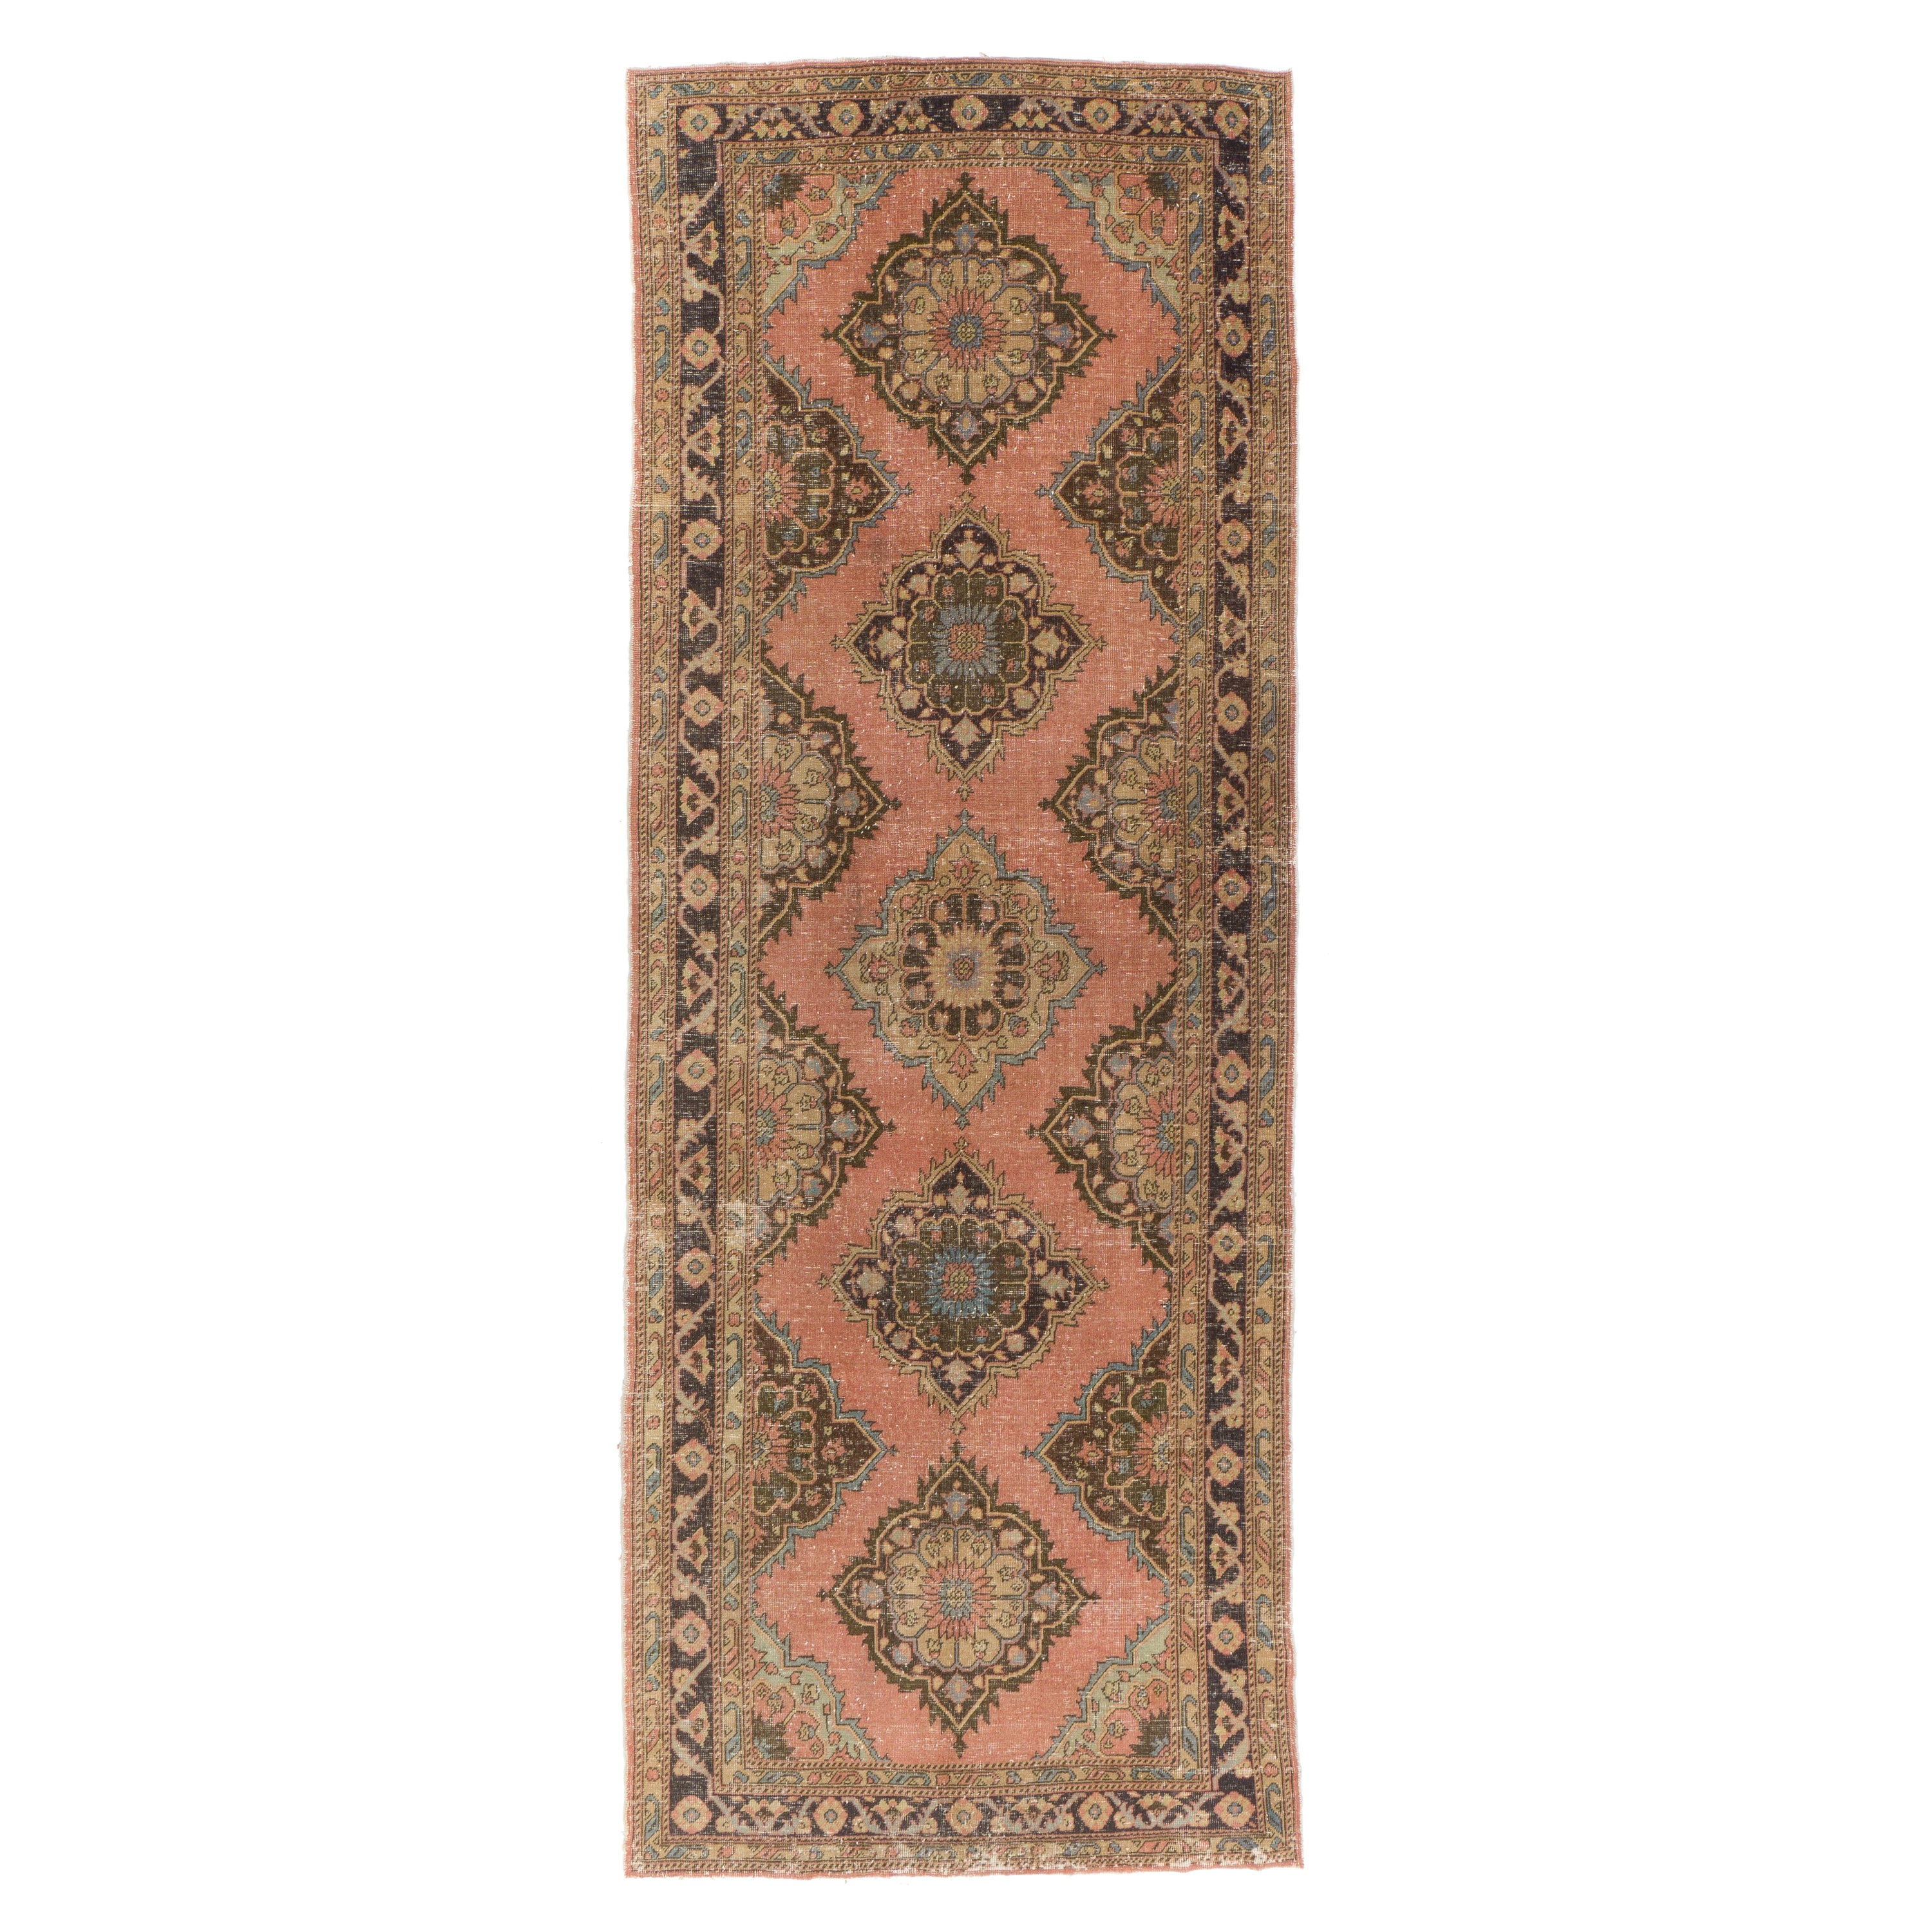 4.6x12.5 Ft Vintage Traditional Runner Rug. Handmade Wool Hallway Carpet For Sale